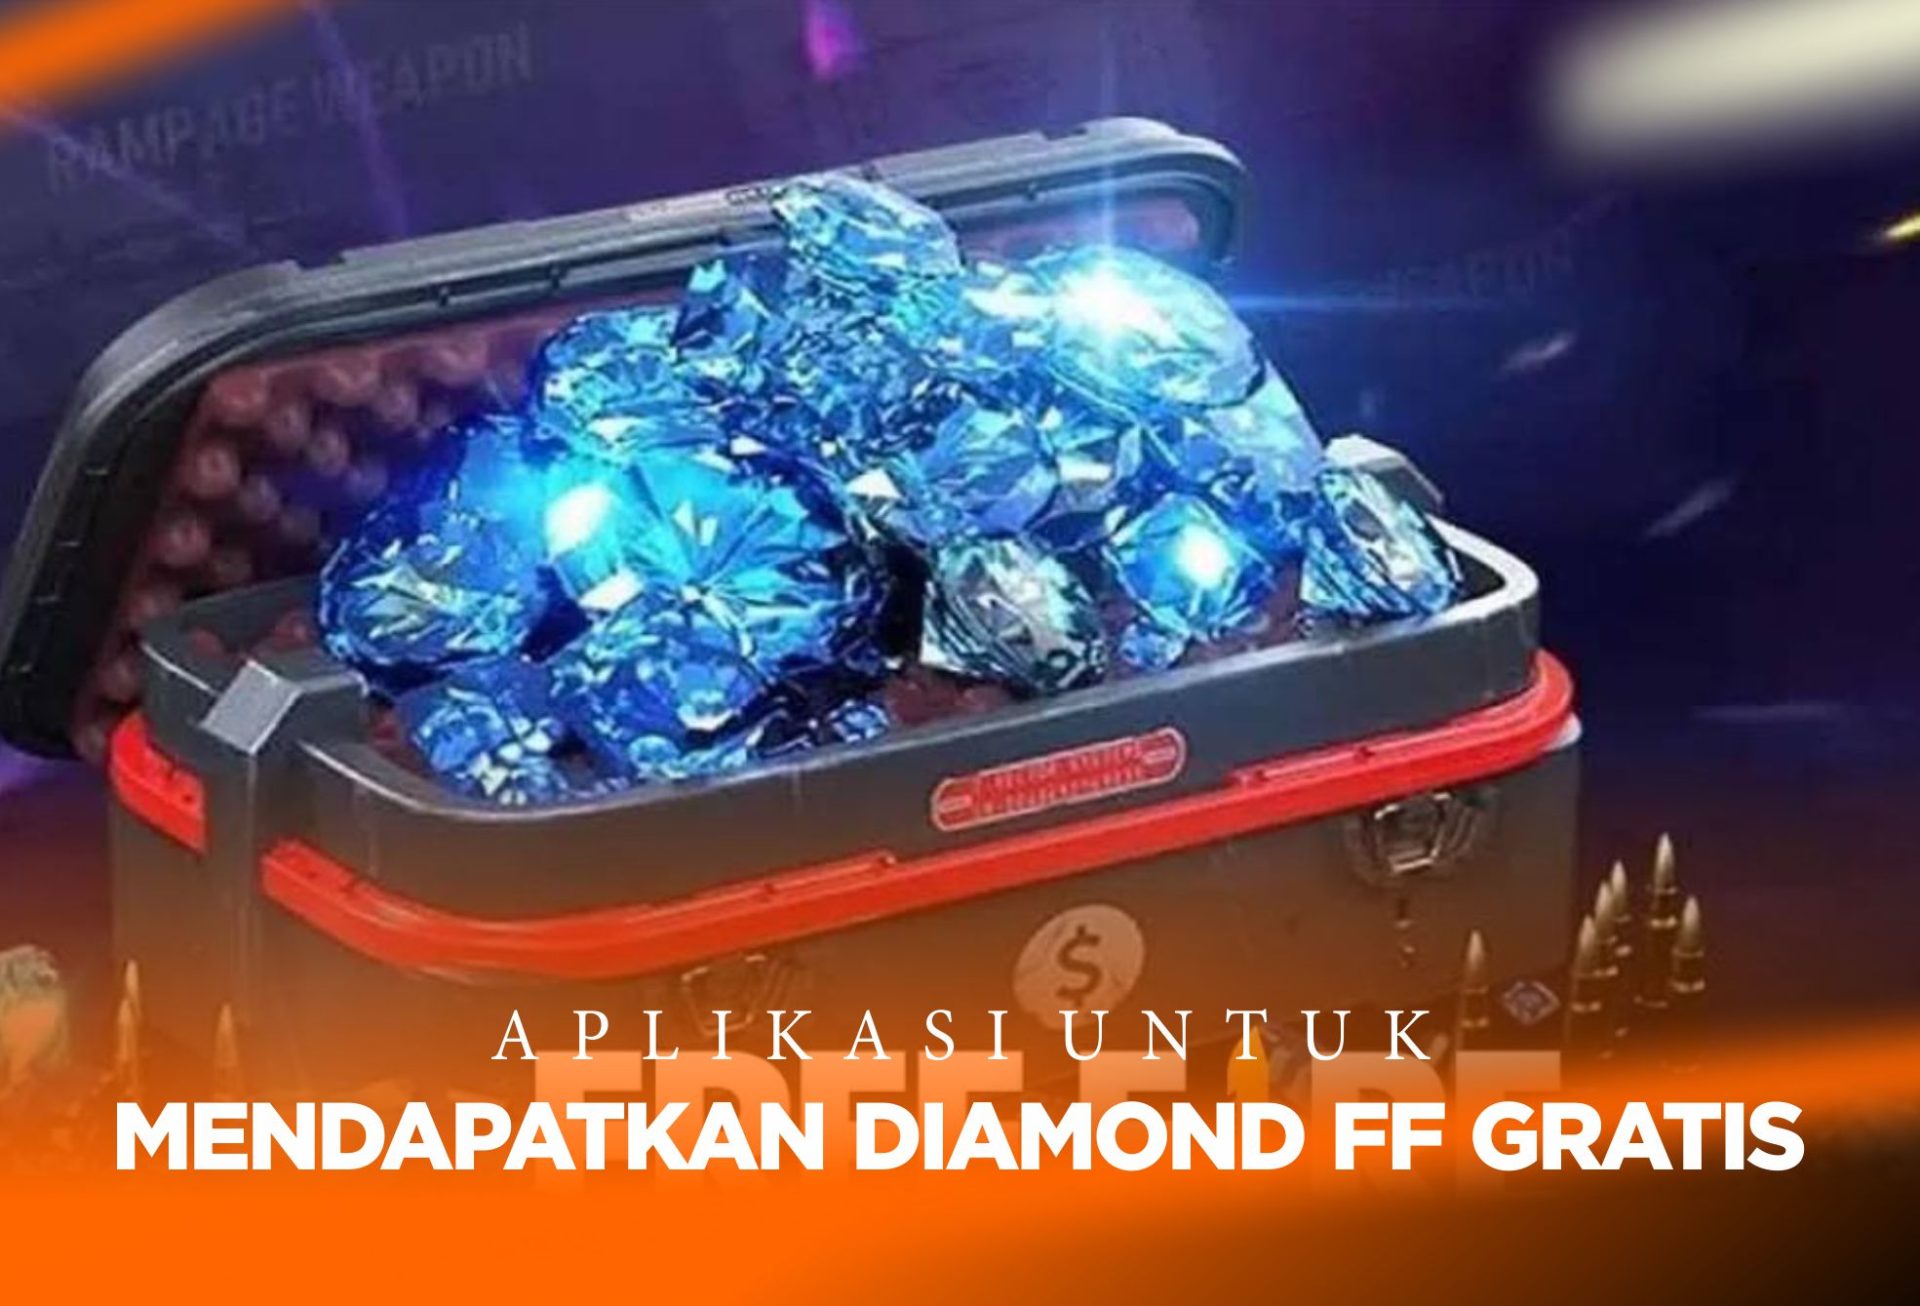 MENDAPATKAN DIAMOND FF GRATIS